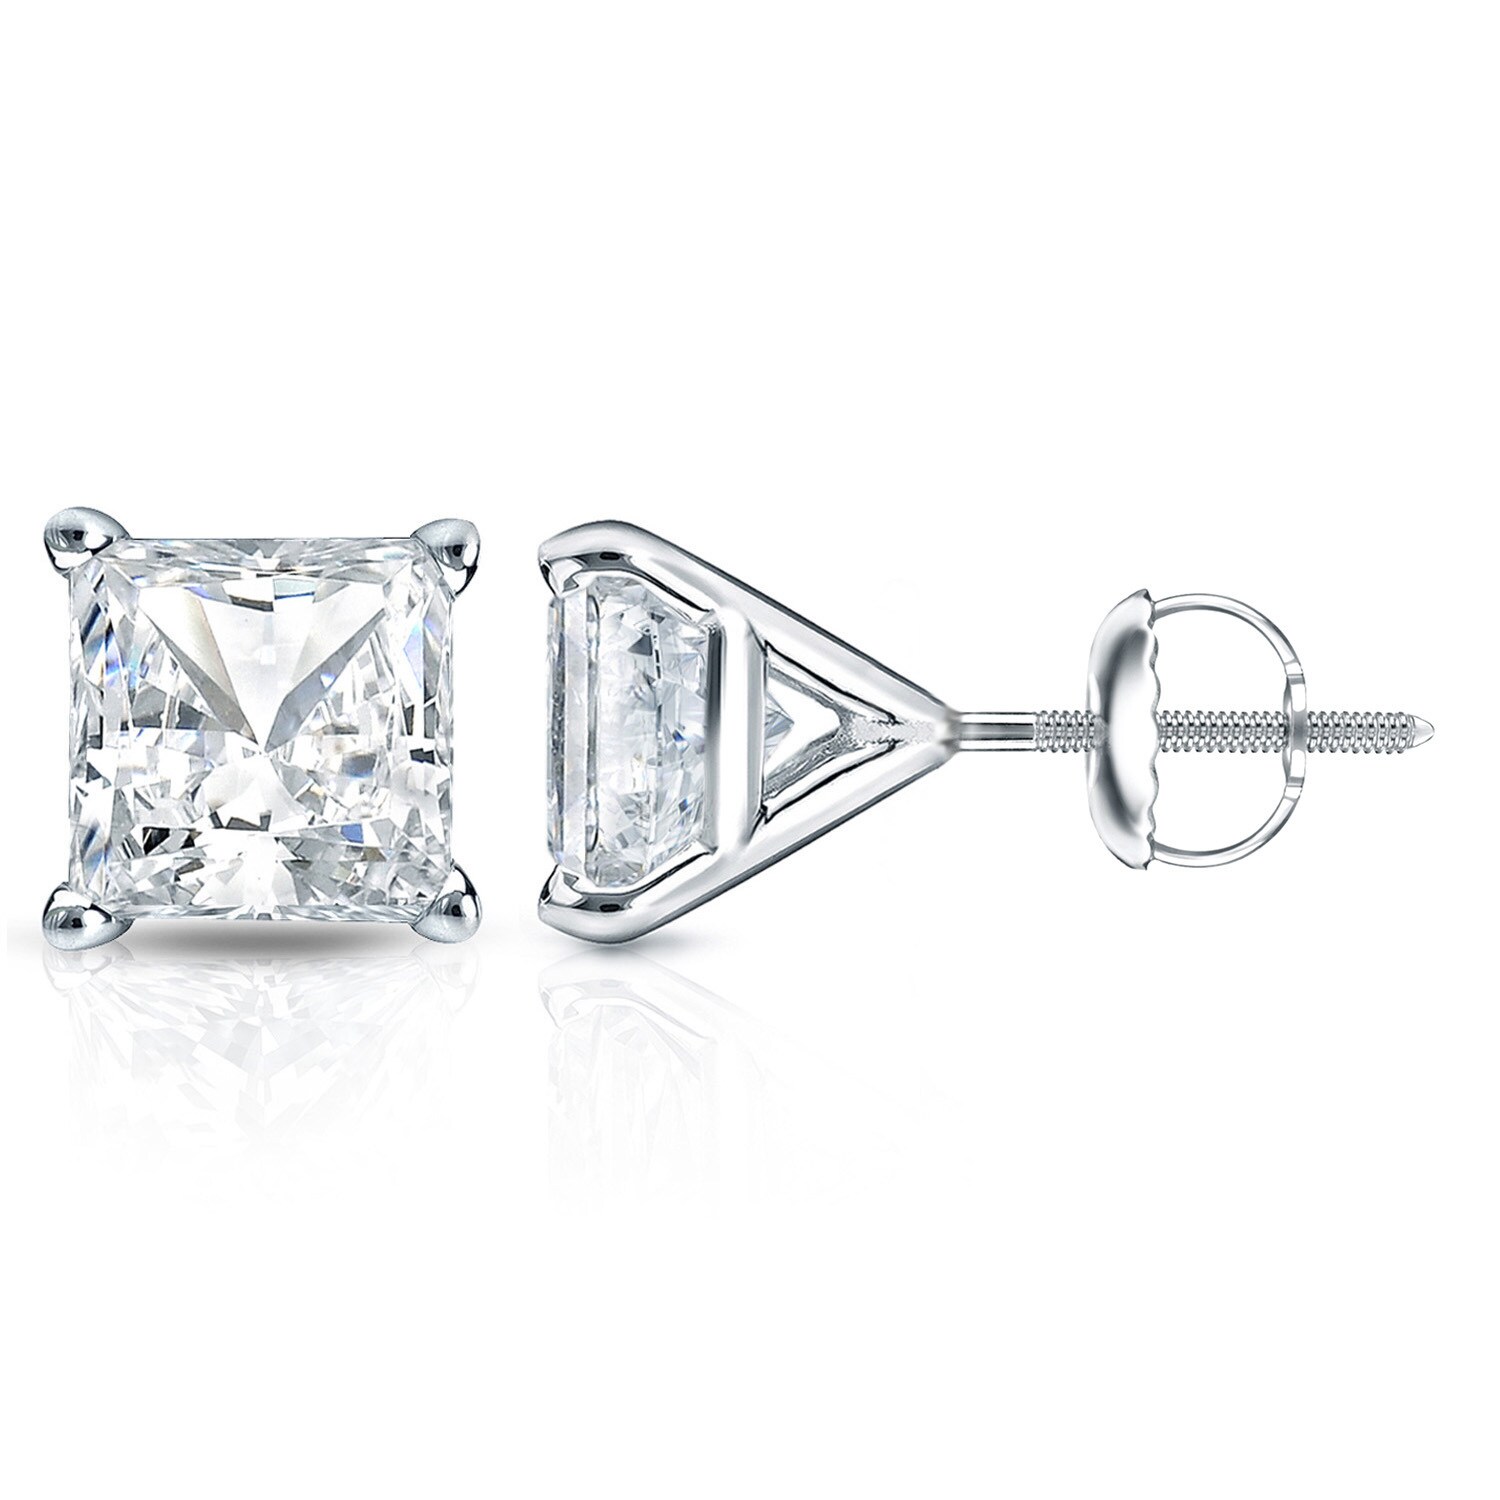 Wonderful 5mm Princess Cut Diamond Stud Earrings 14k Rose Gold Over .925 Sterling Silver For Womens